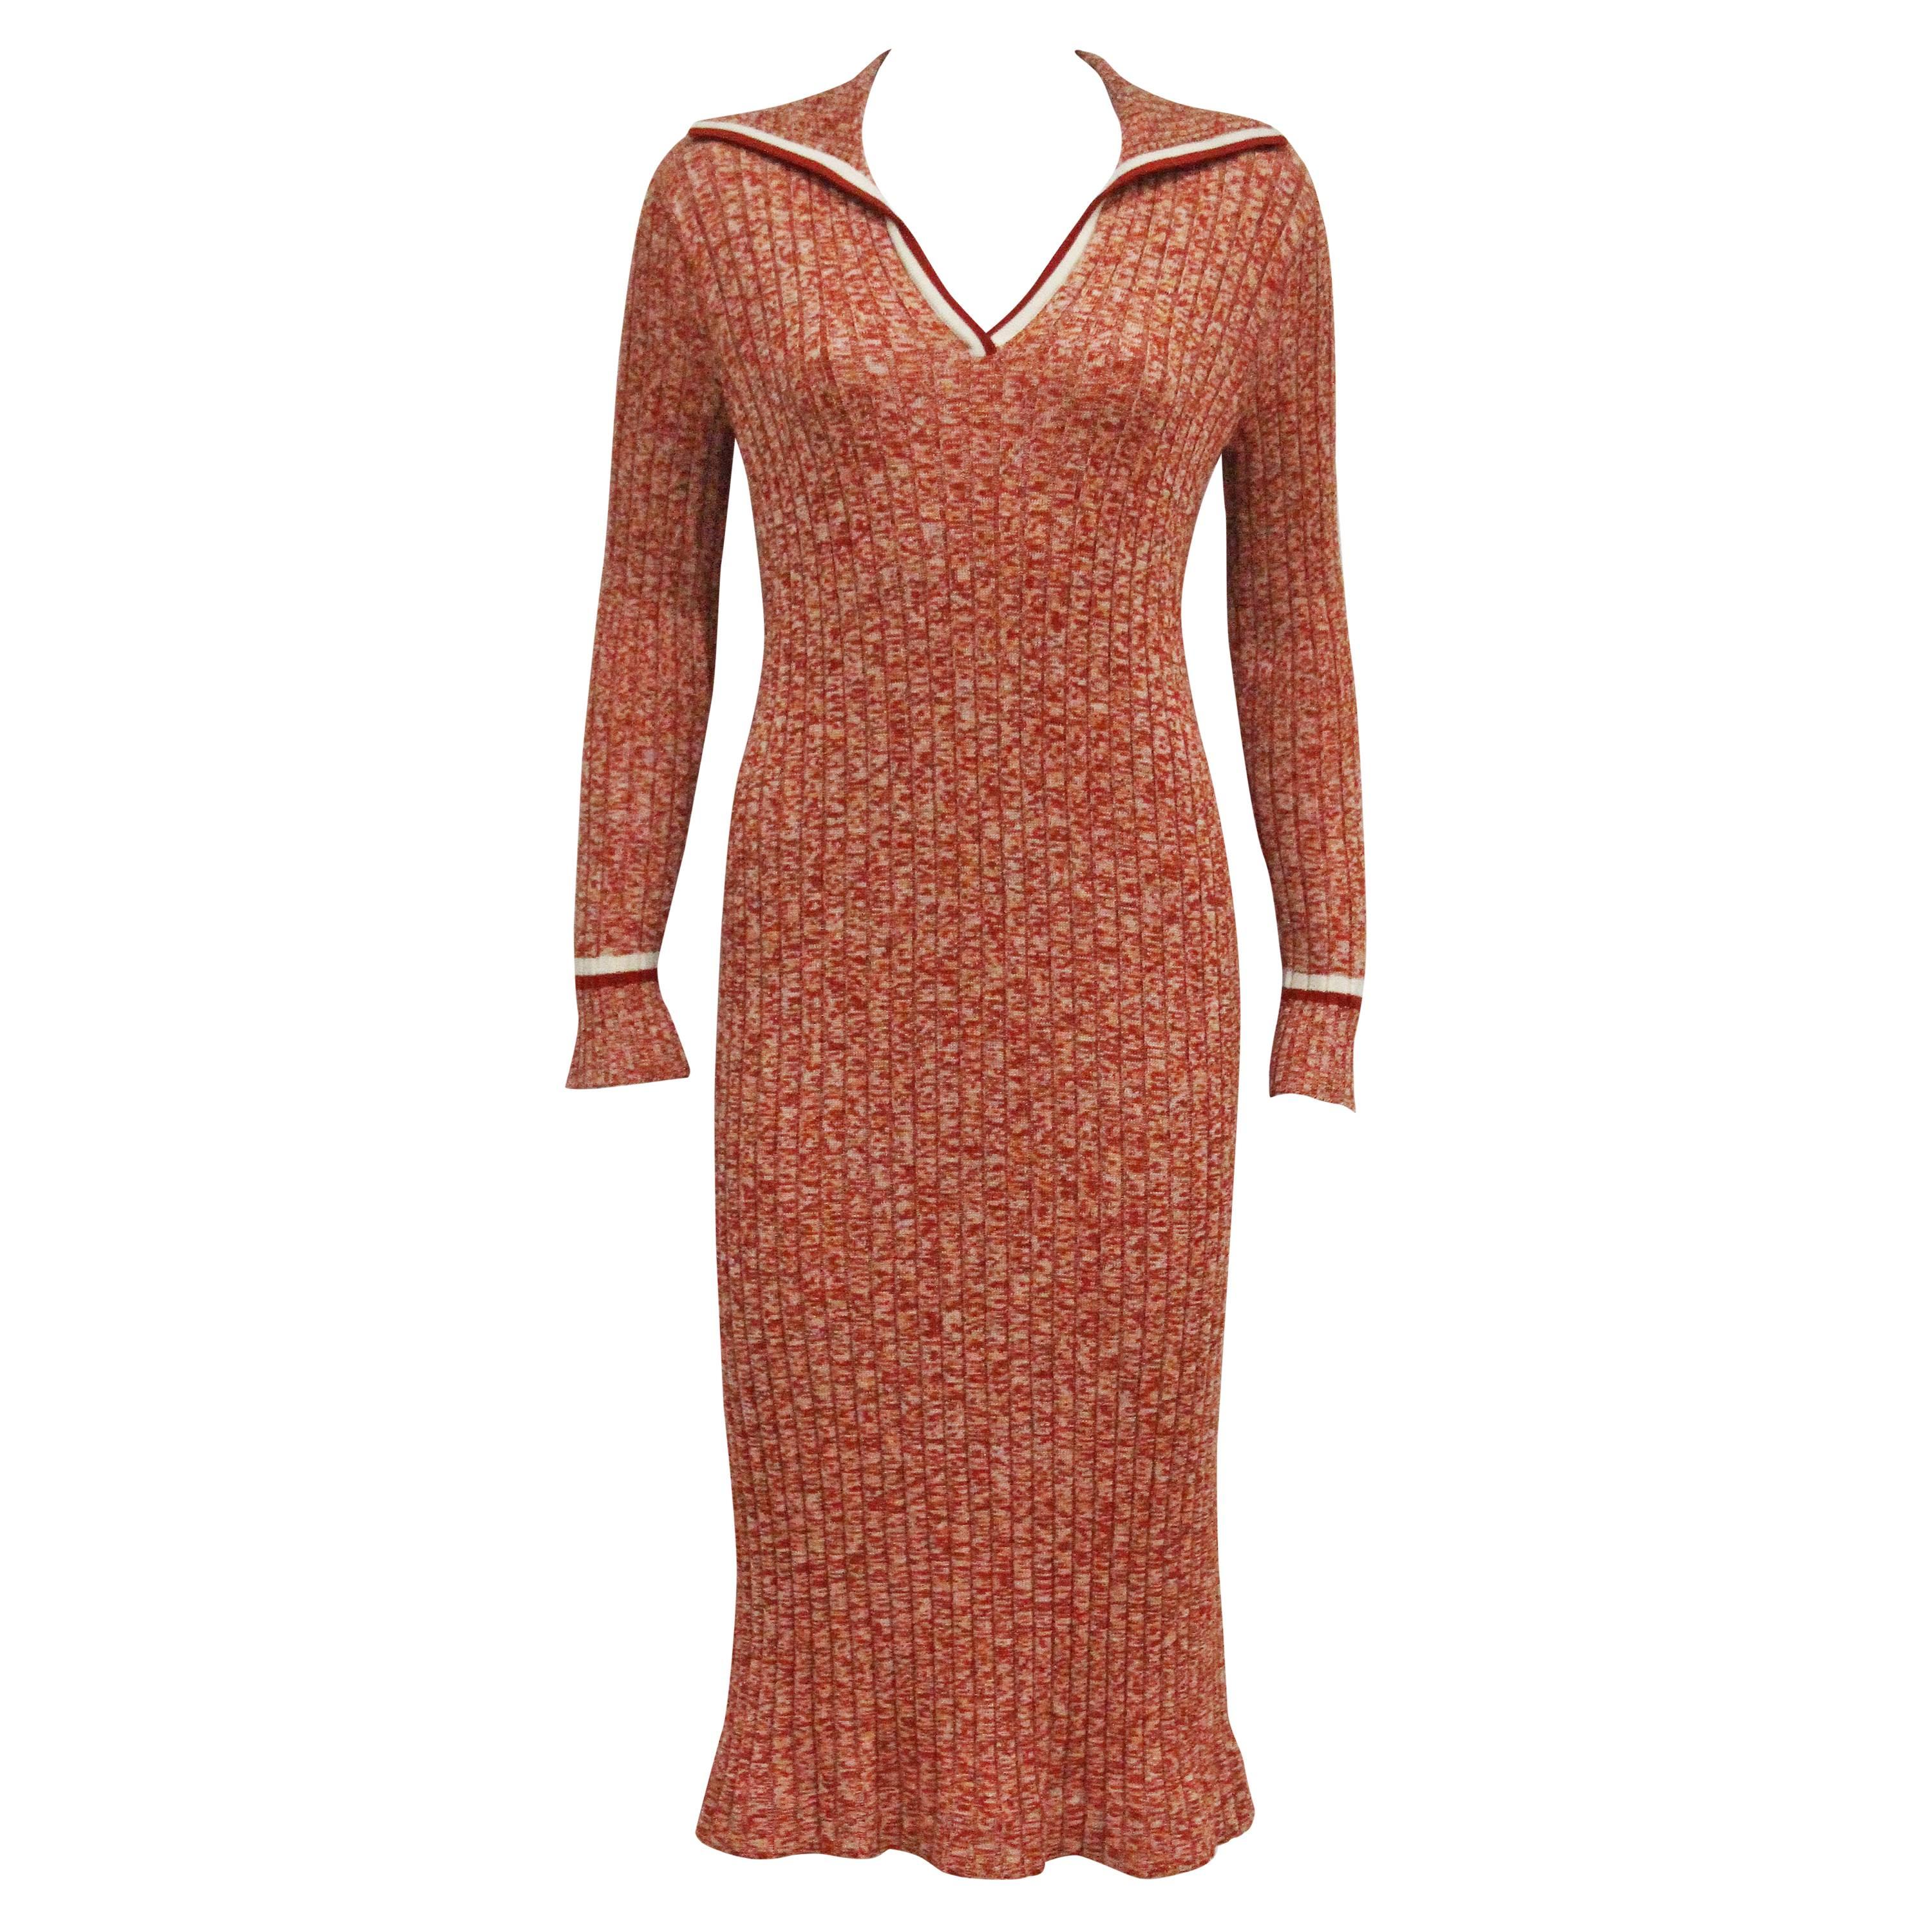 Celine nautical style rib knit dress, c. 1970s